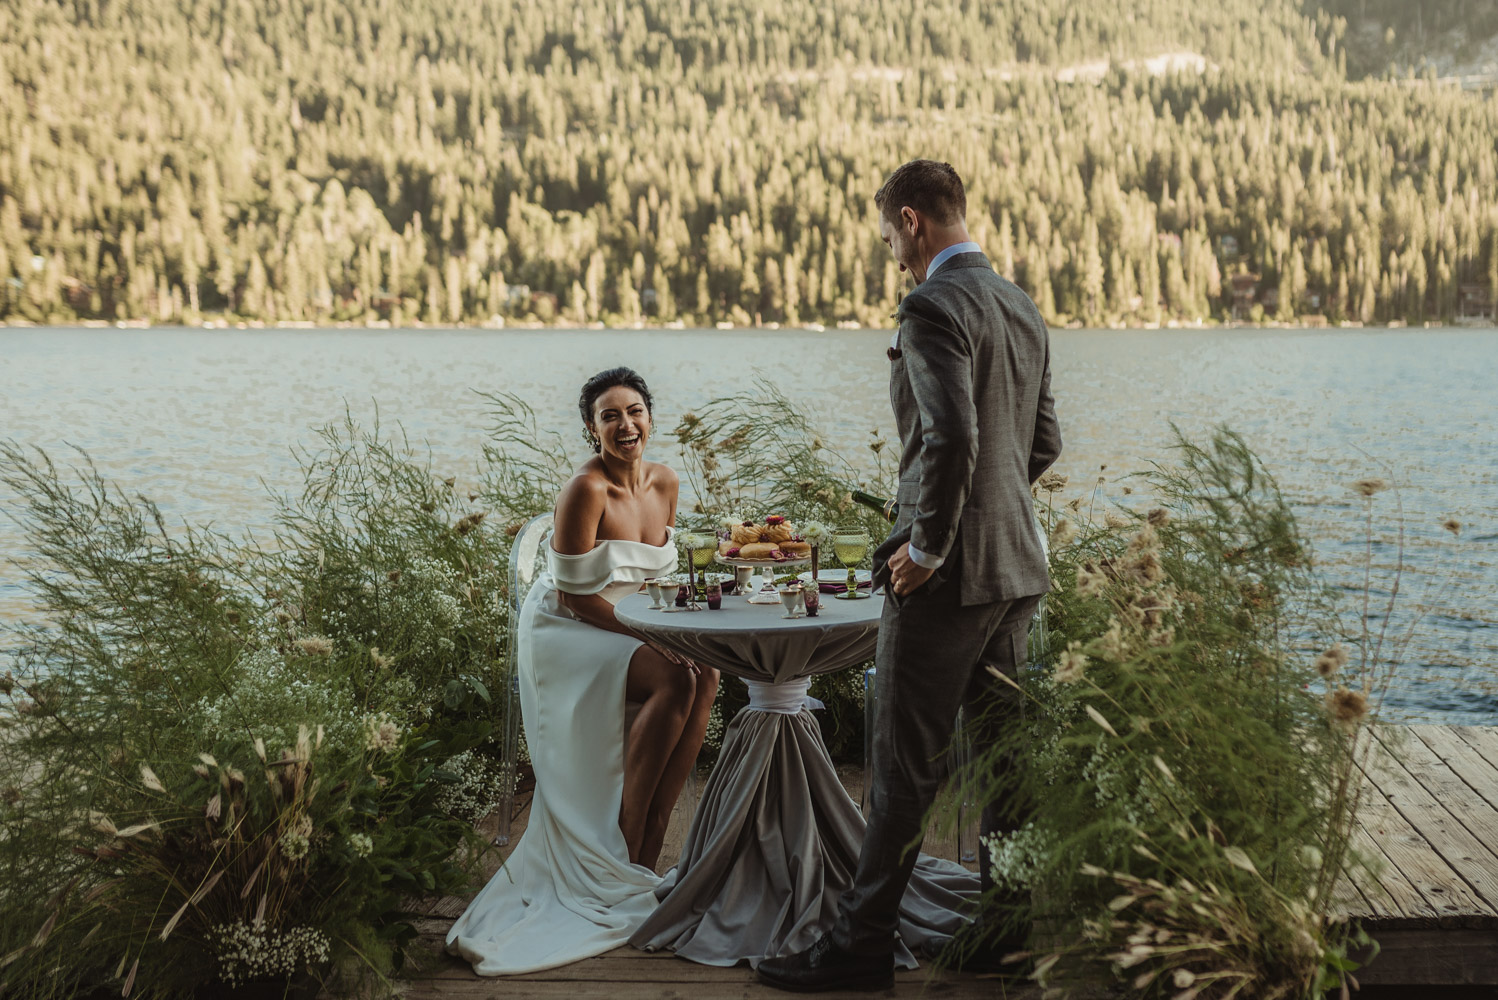 Lake Tahoe pop-up wedding/elopement sweetheart table set-up photo